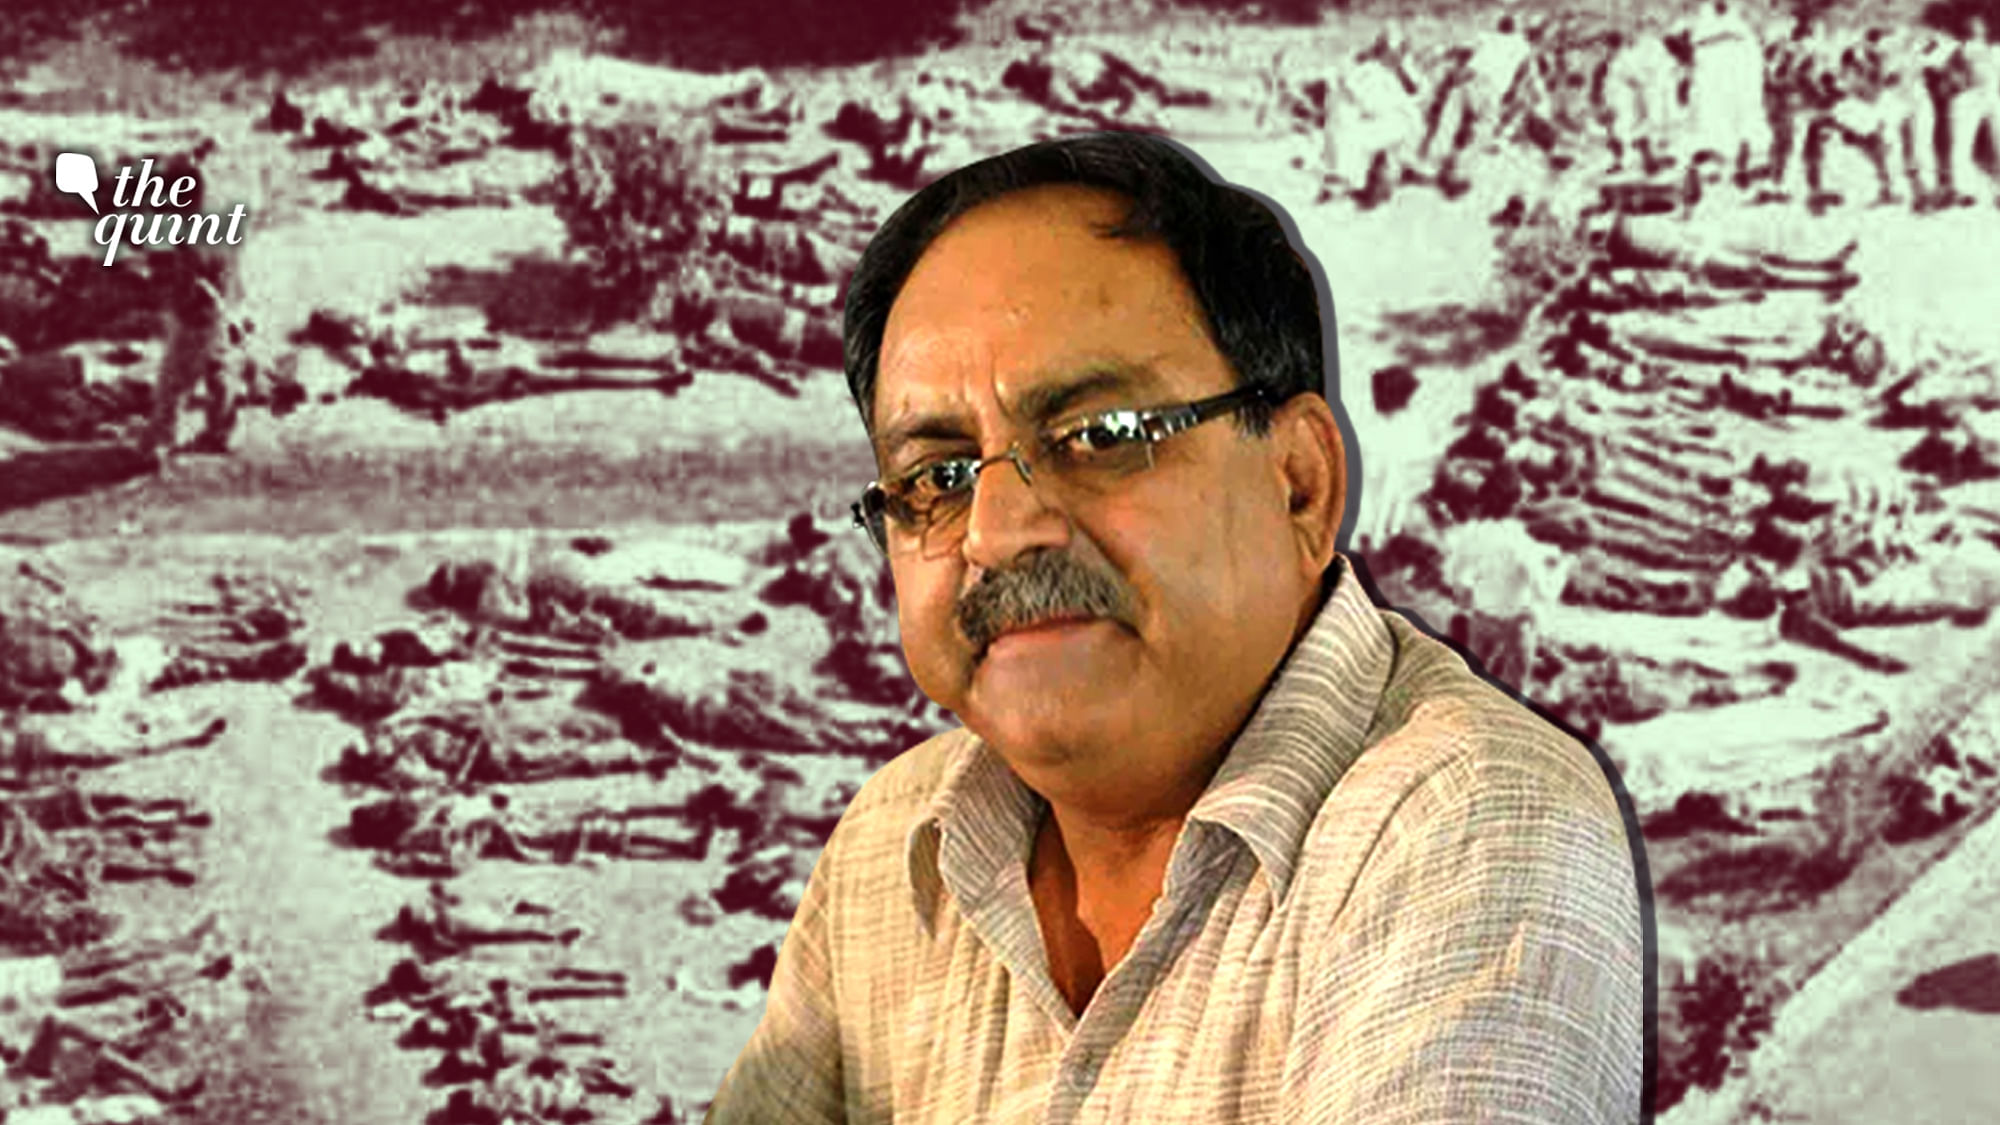 Abdul Jabbar, convener of the Bhopal Gas Peedit Mahila Udyog Sangathan, was disliked and resisted at all levels of hierarchy.